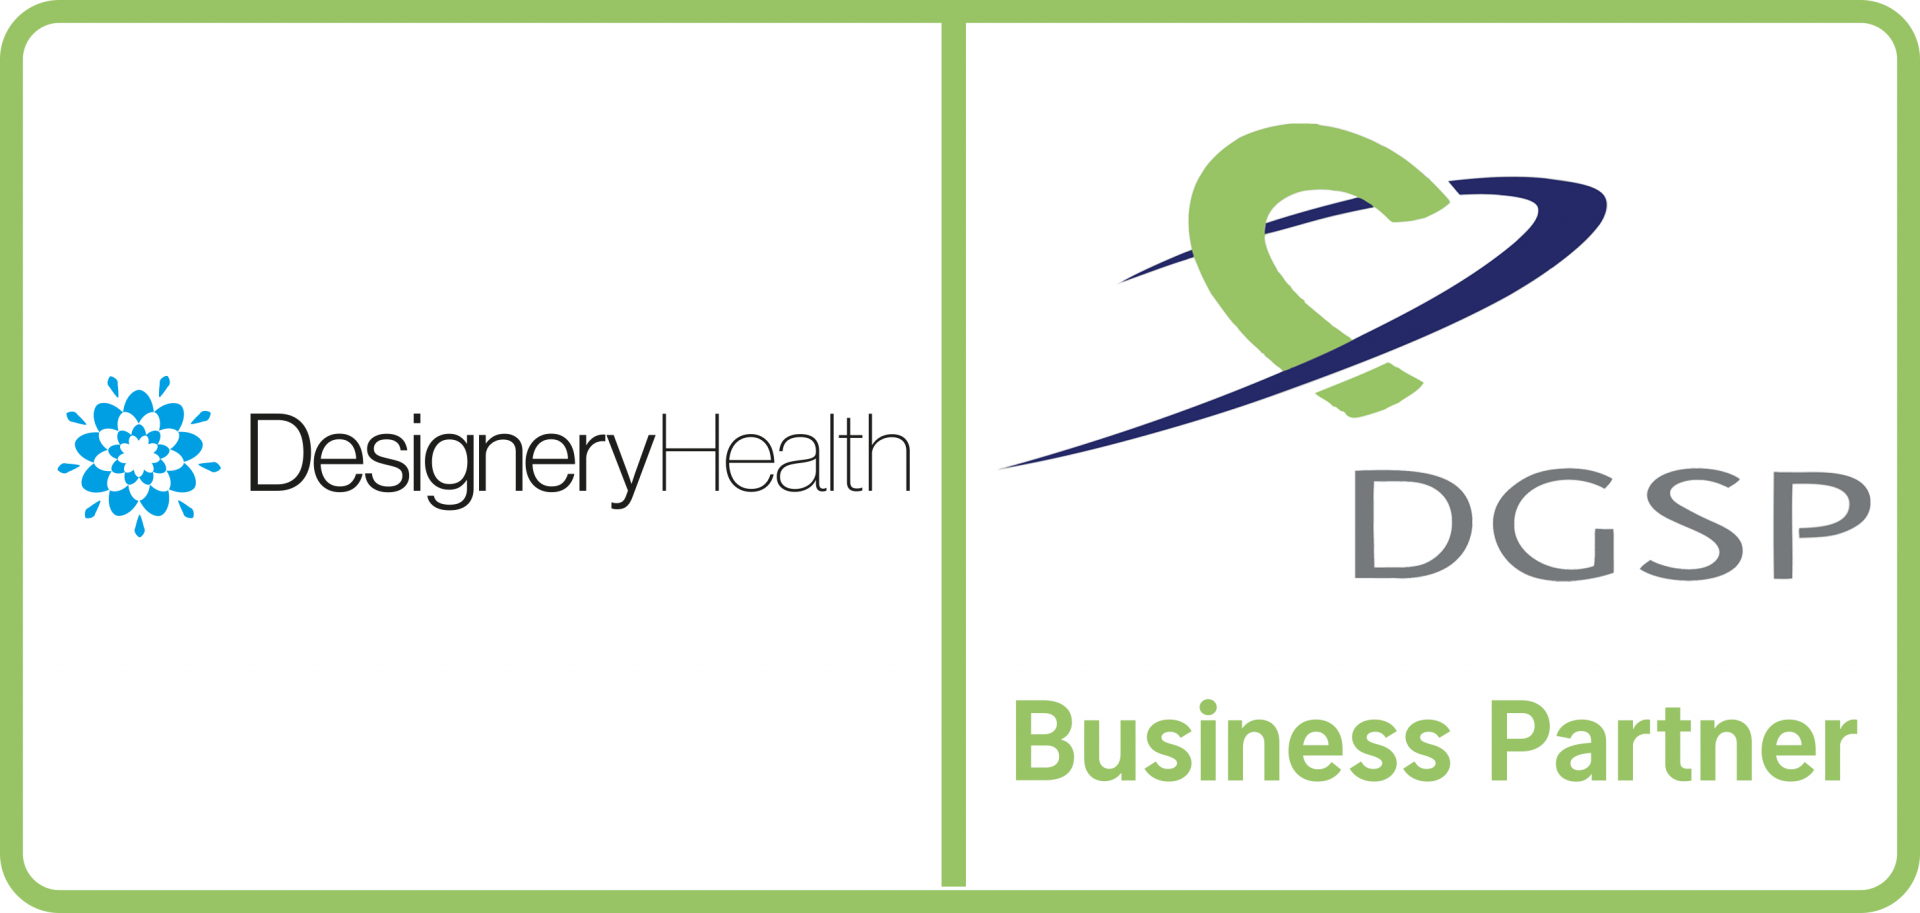 Business Partner Designery Health